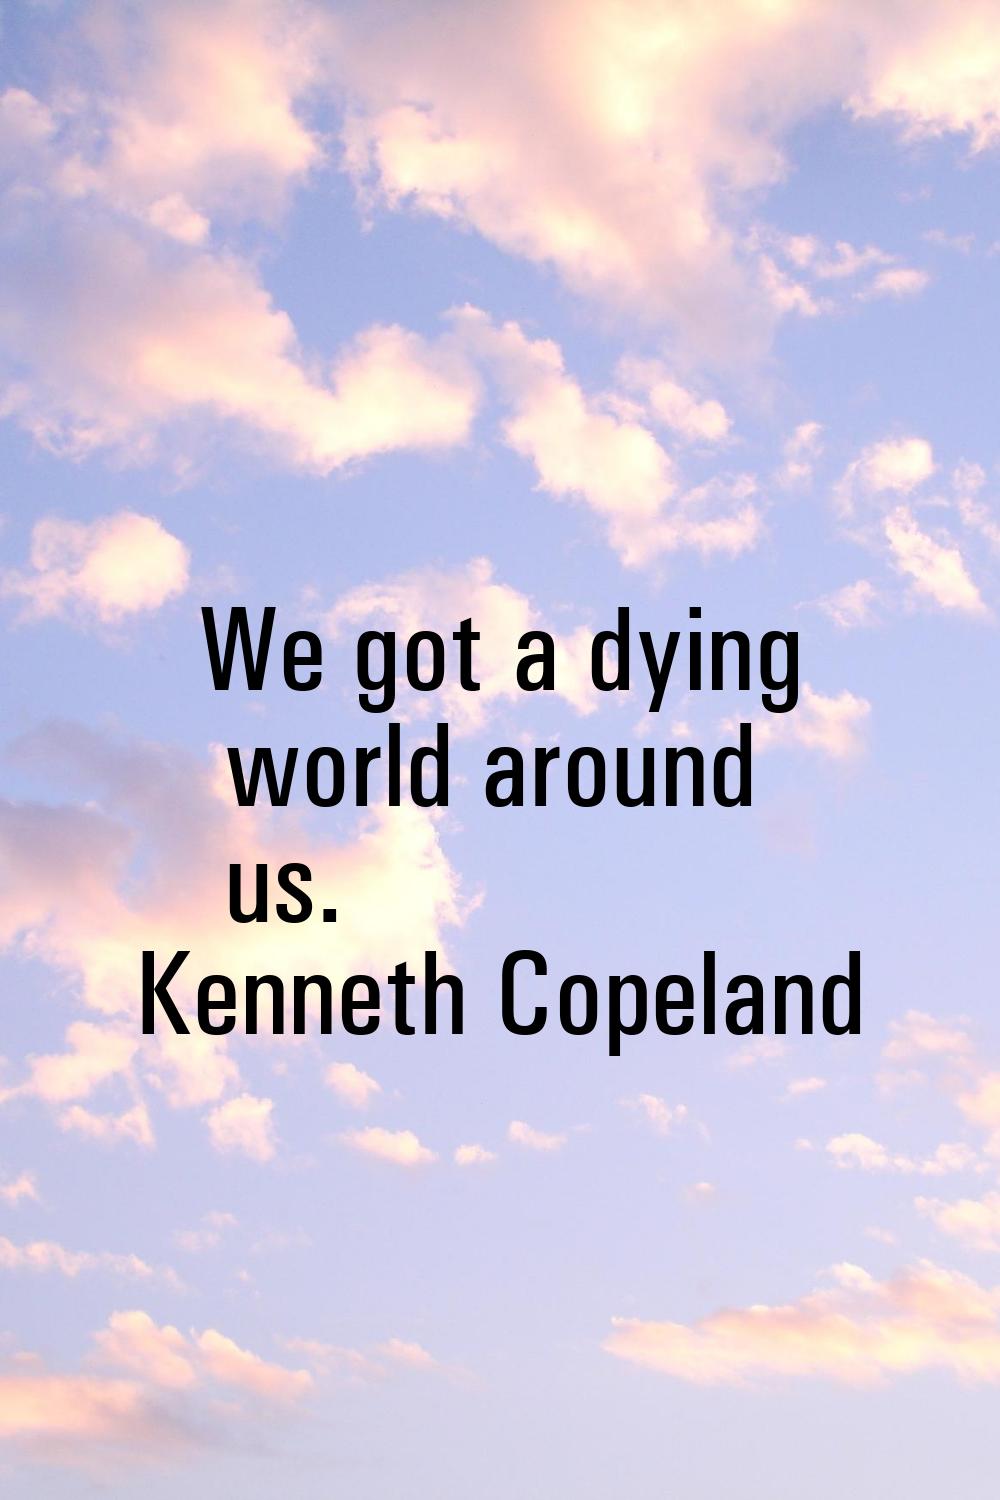 We got a dying world around us.